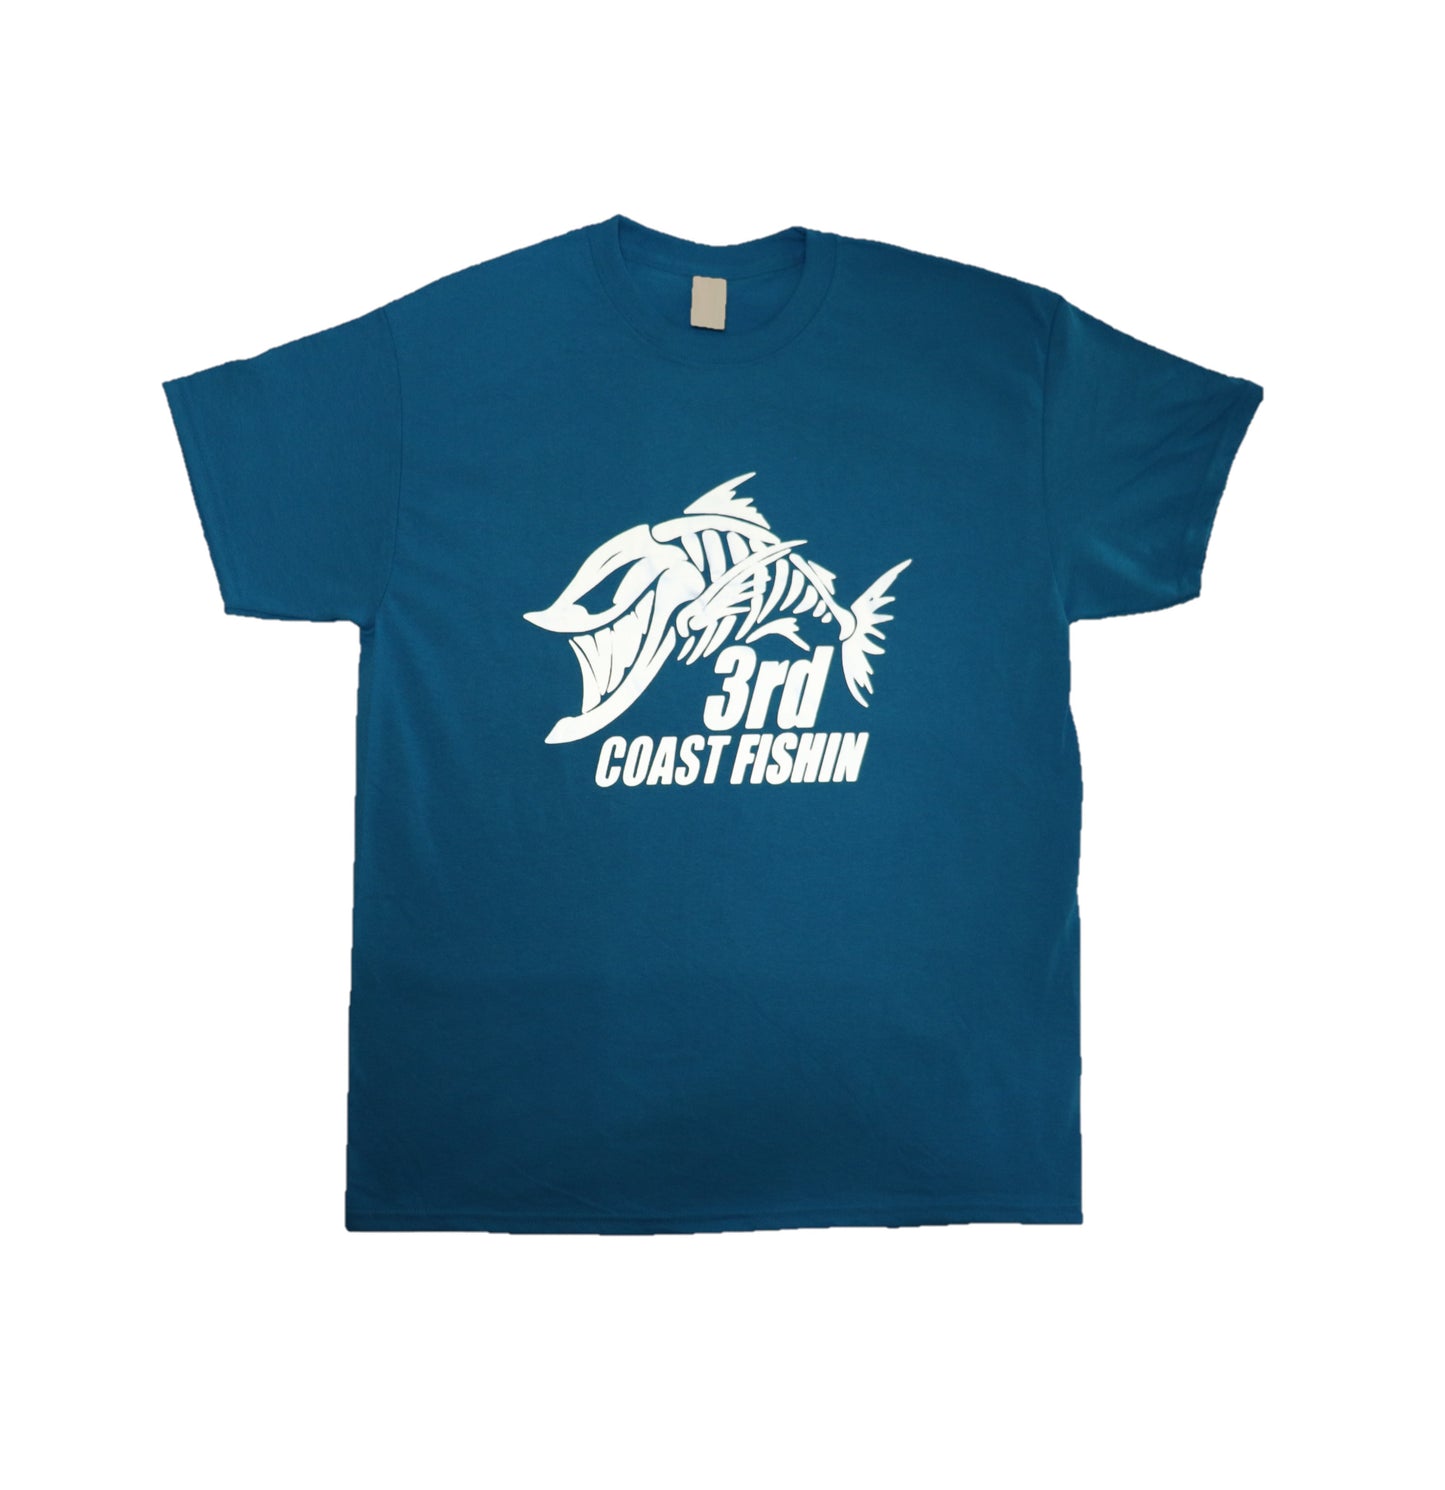 3rd Coast Fishin Logo T-Shirt